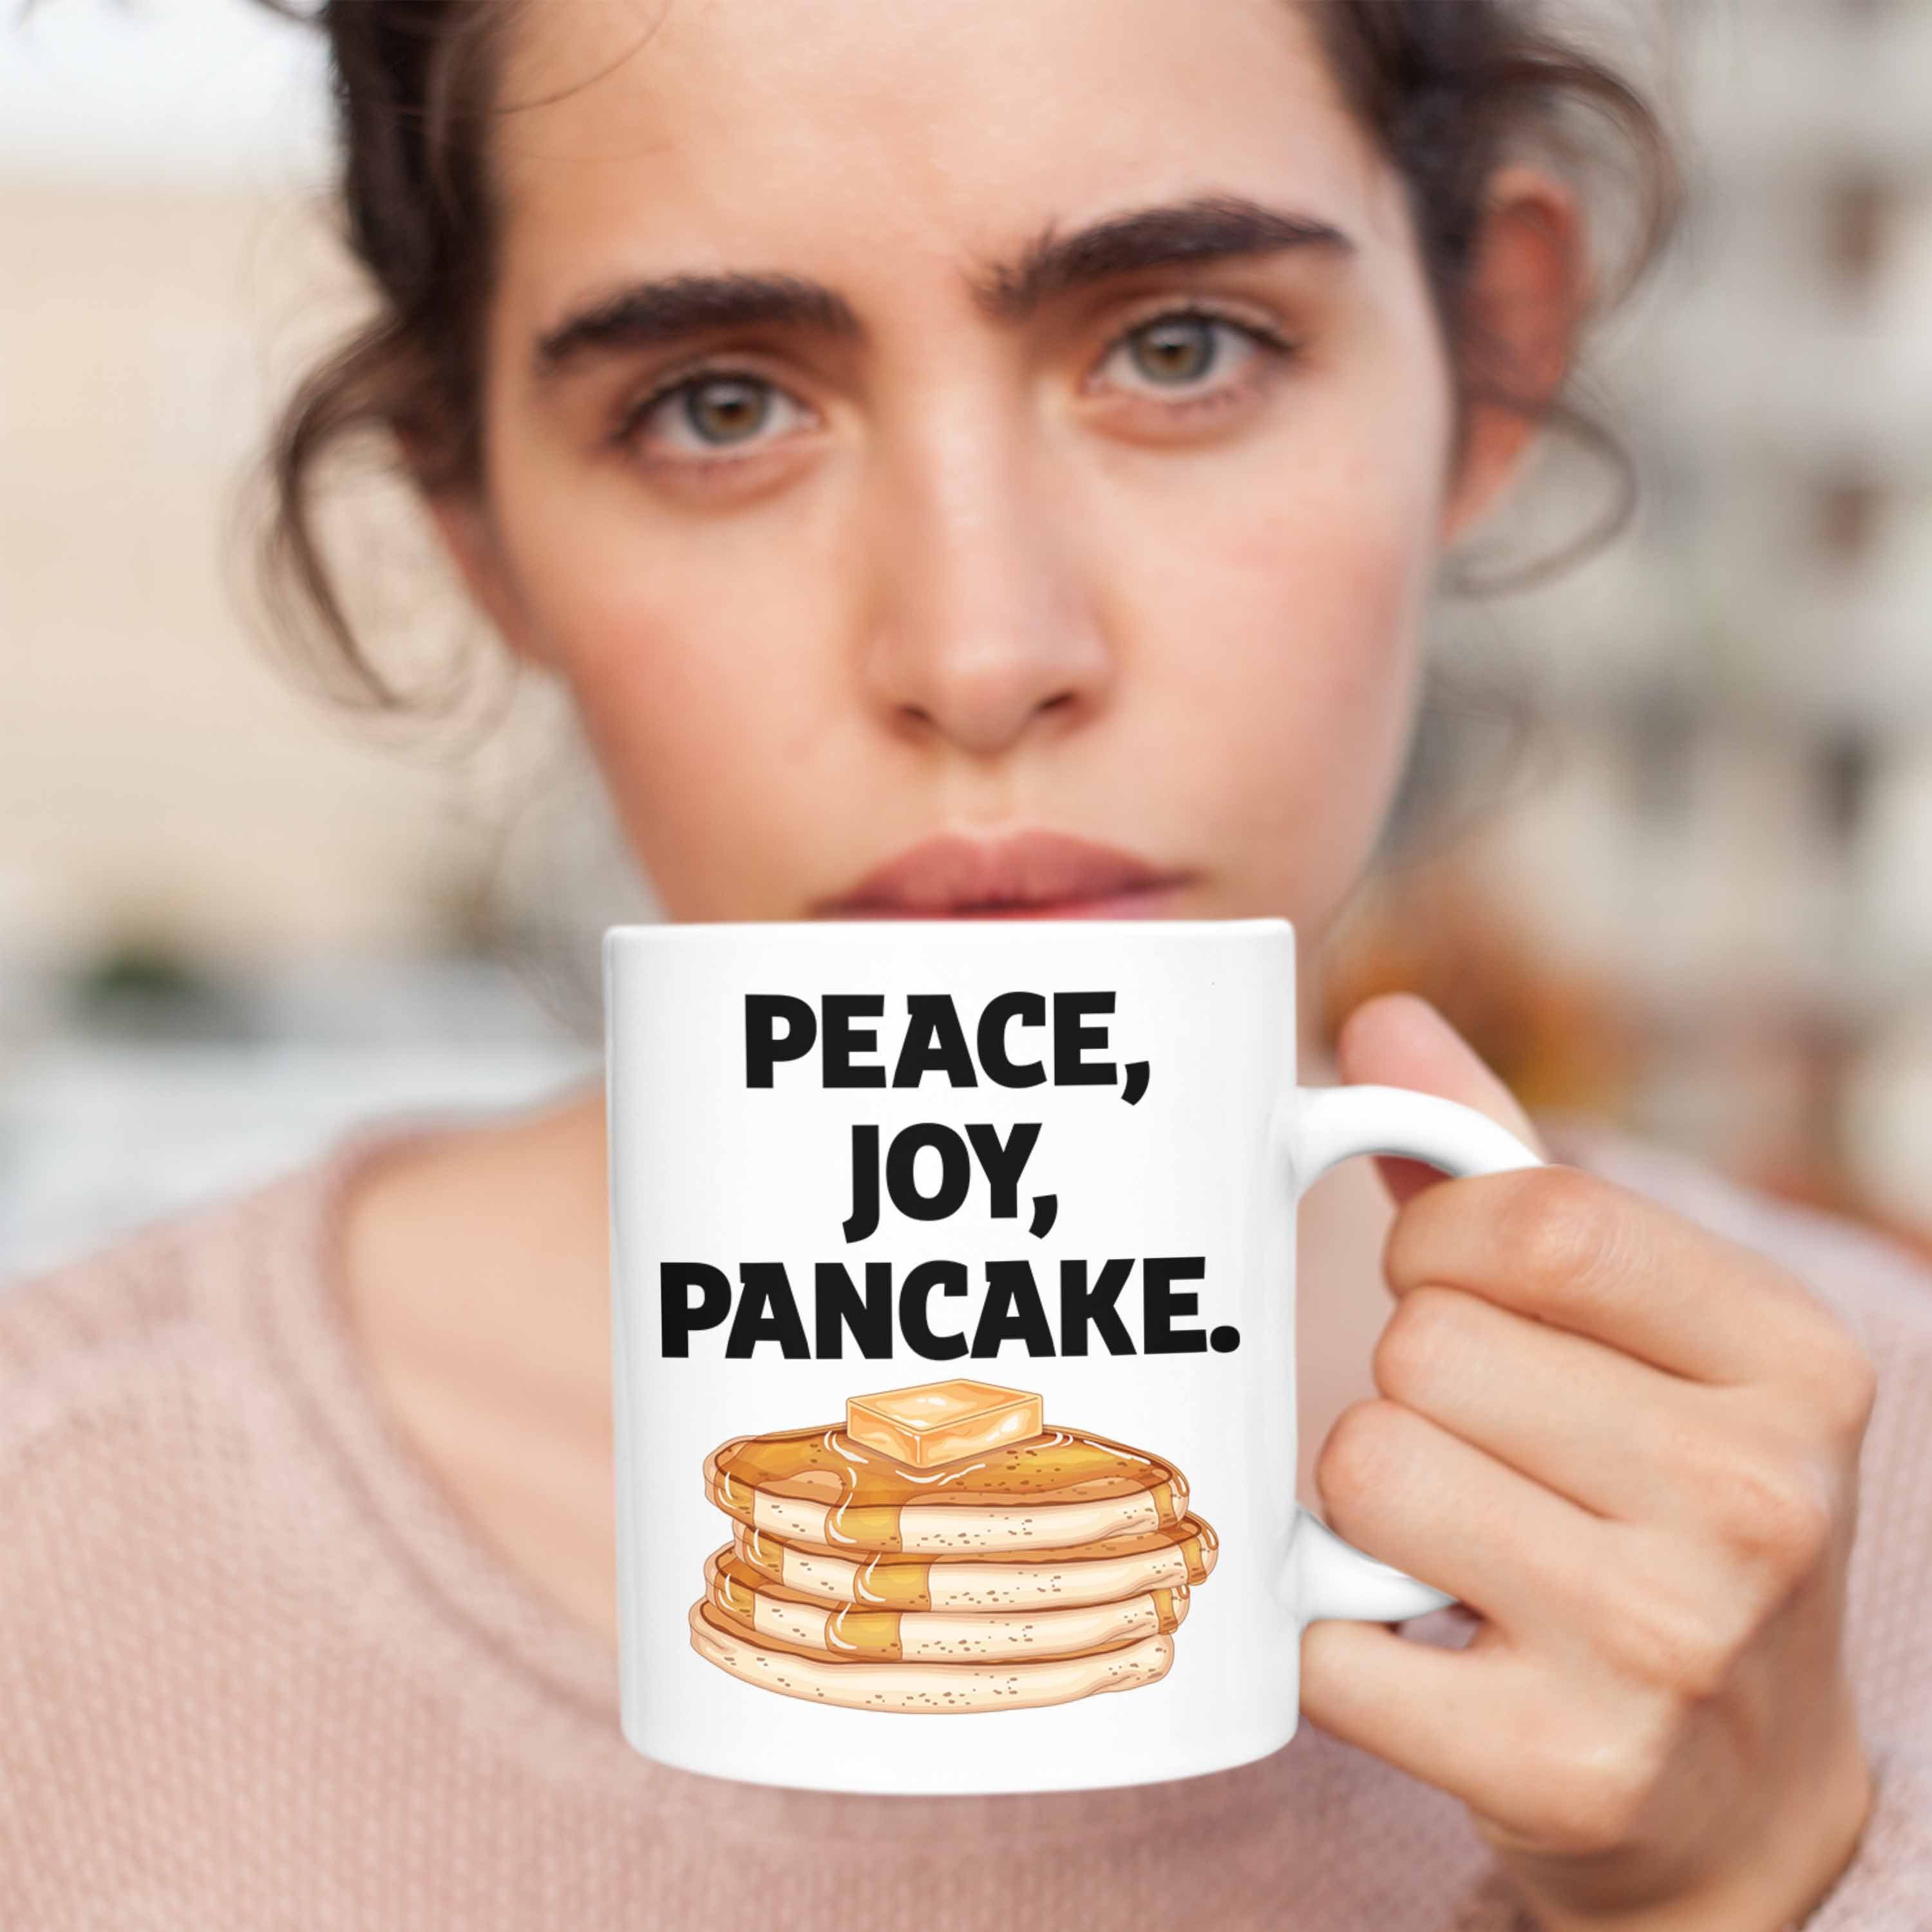 Trendation Tasse Joy Peace Kaffee-Becher Pfannkuchen Weiss Pancake Tasse Eierkuchen Geschenk